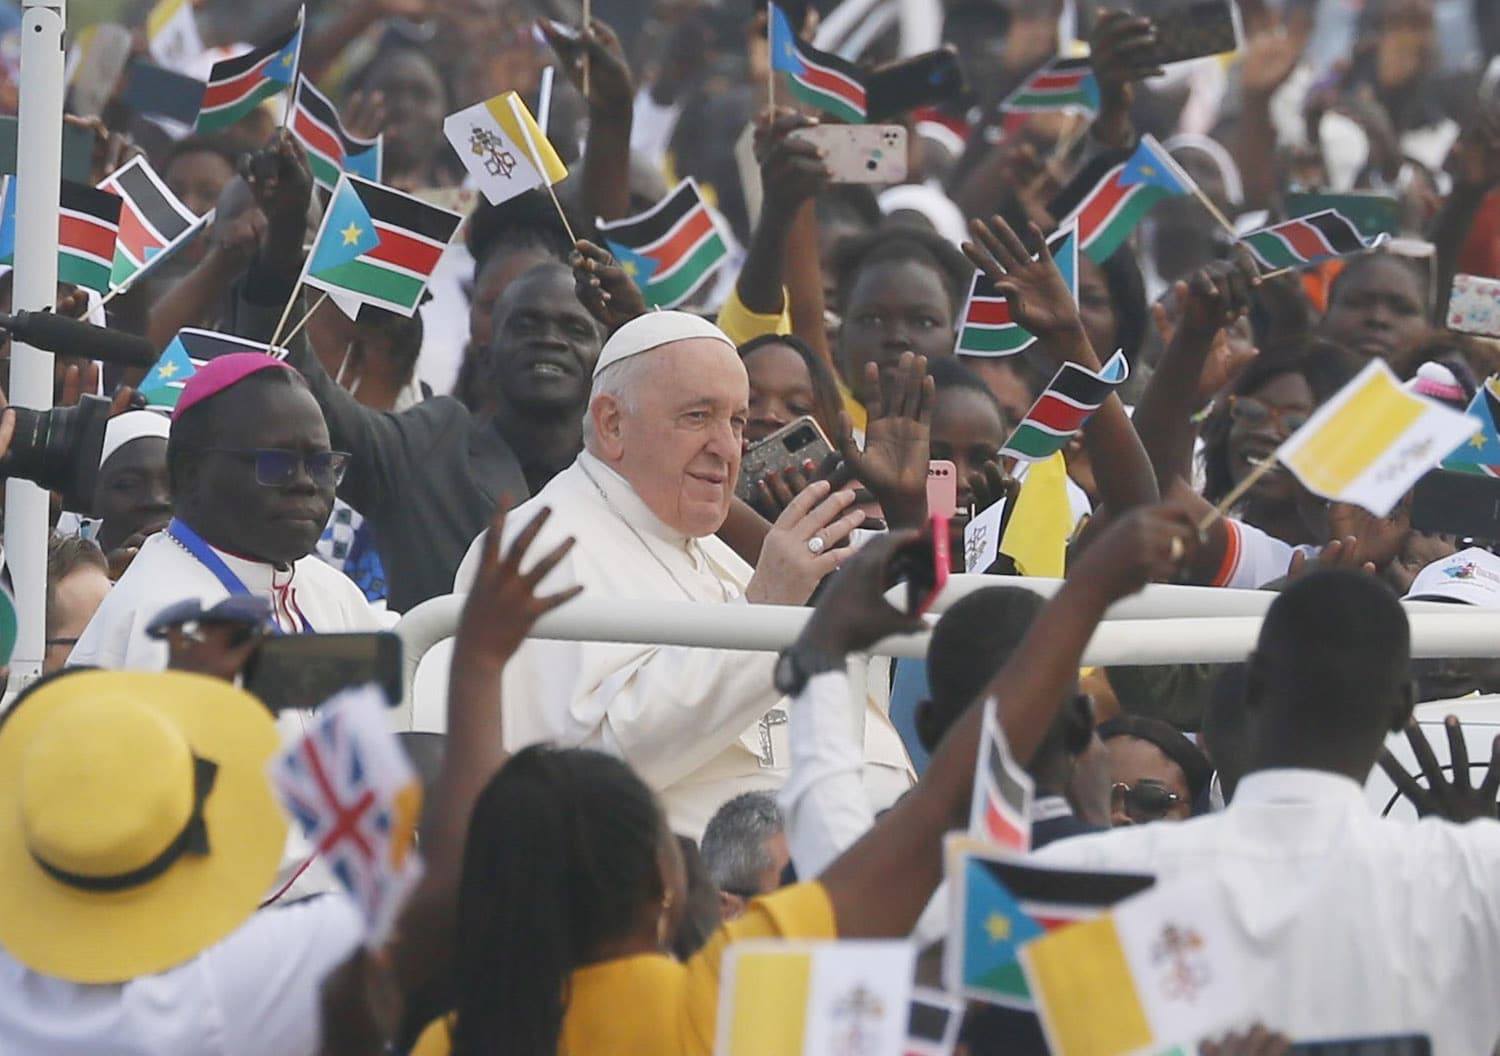 Pope South Sudan